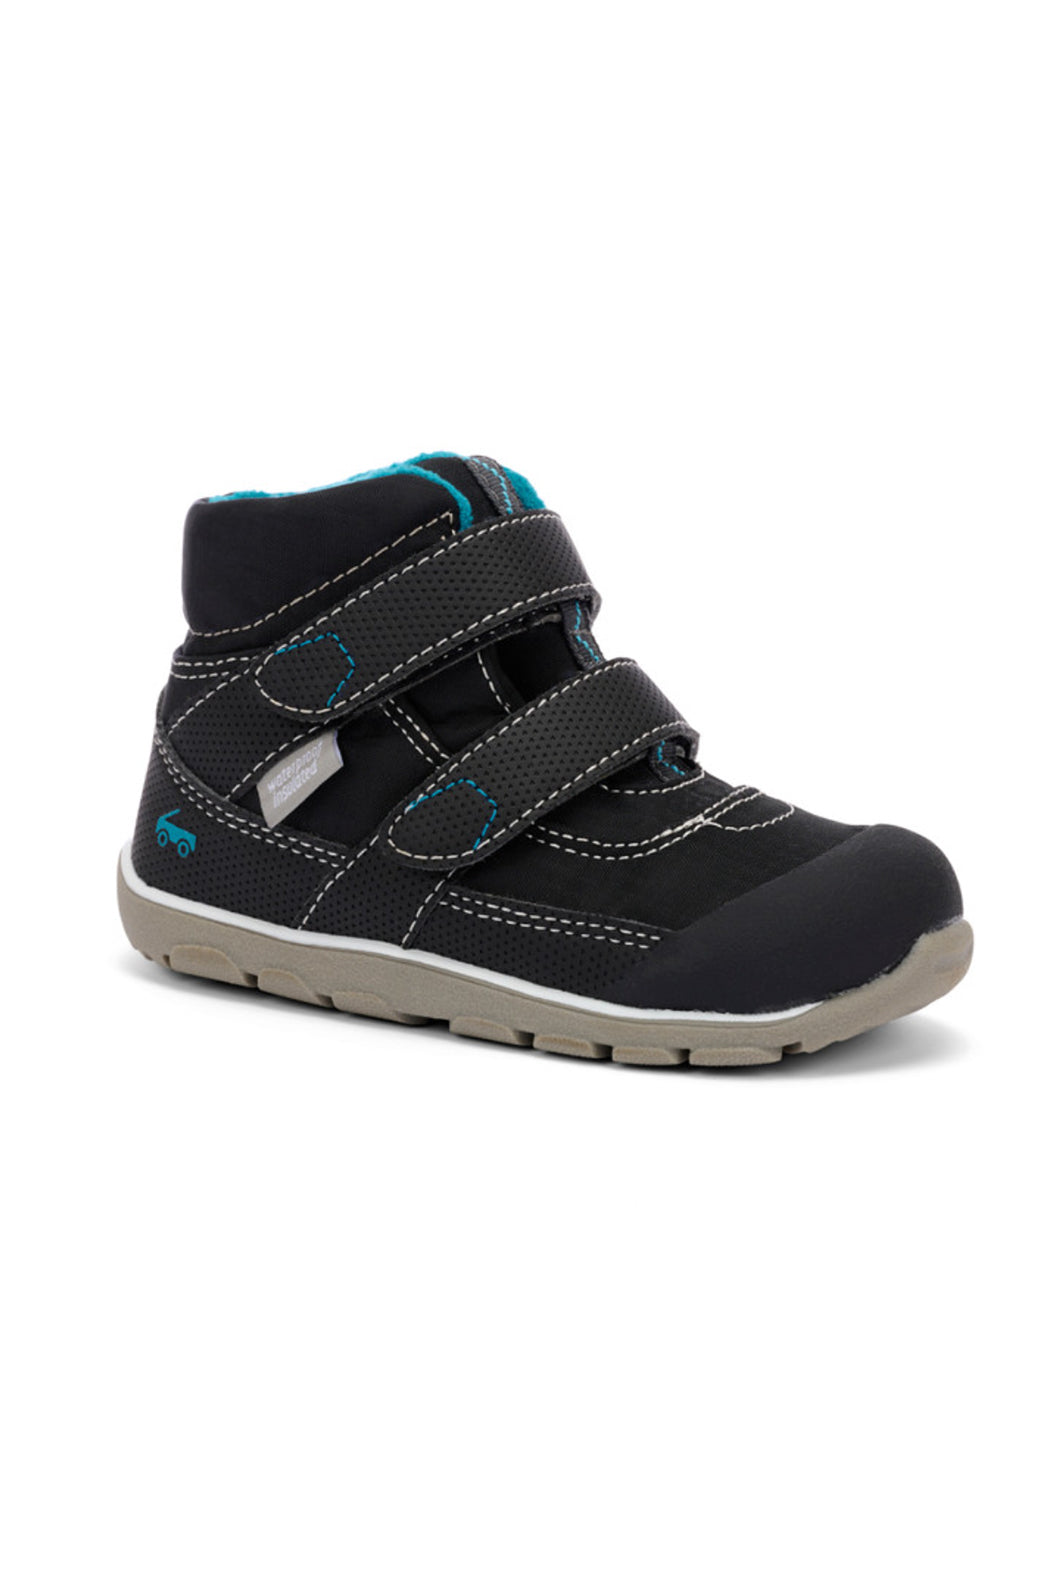 See Kai Run Atlas Waterproof/Insulated Boots - Black